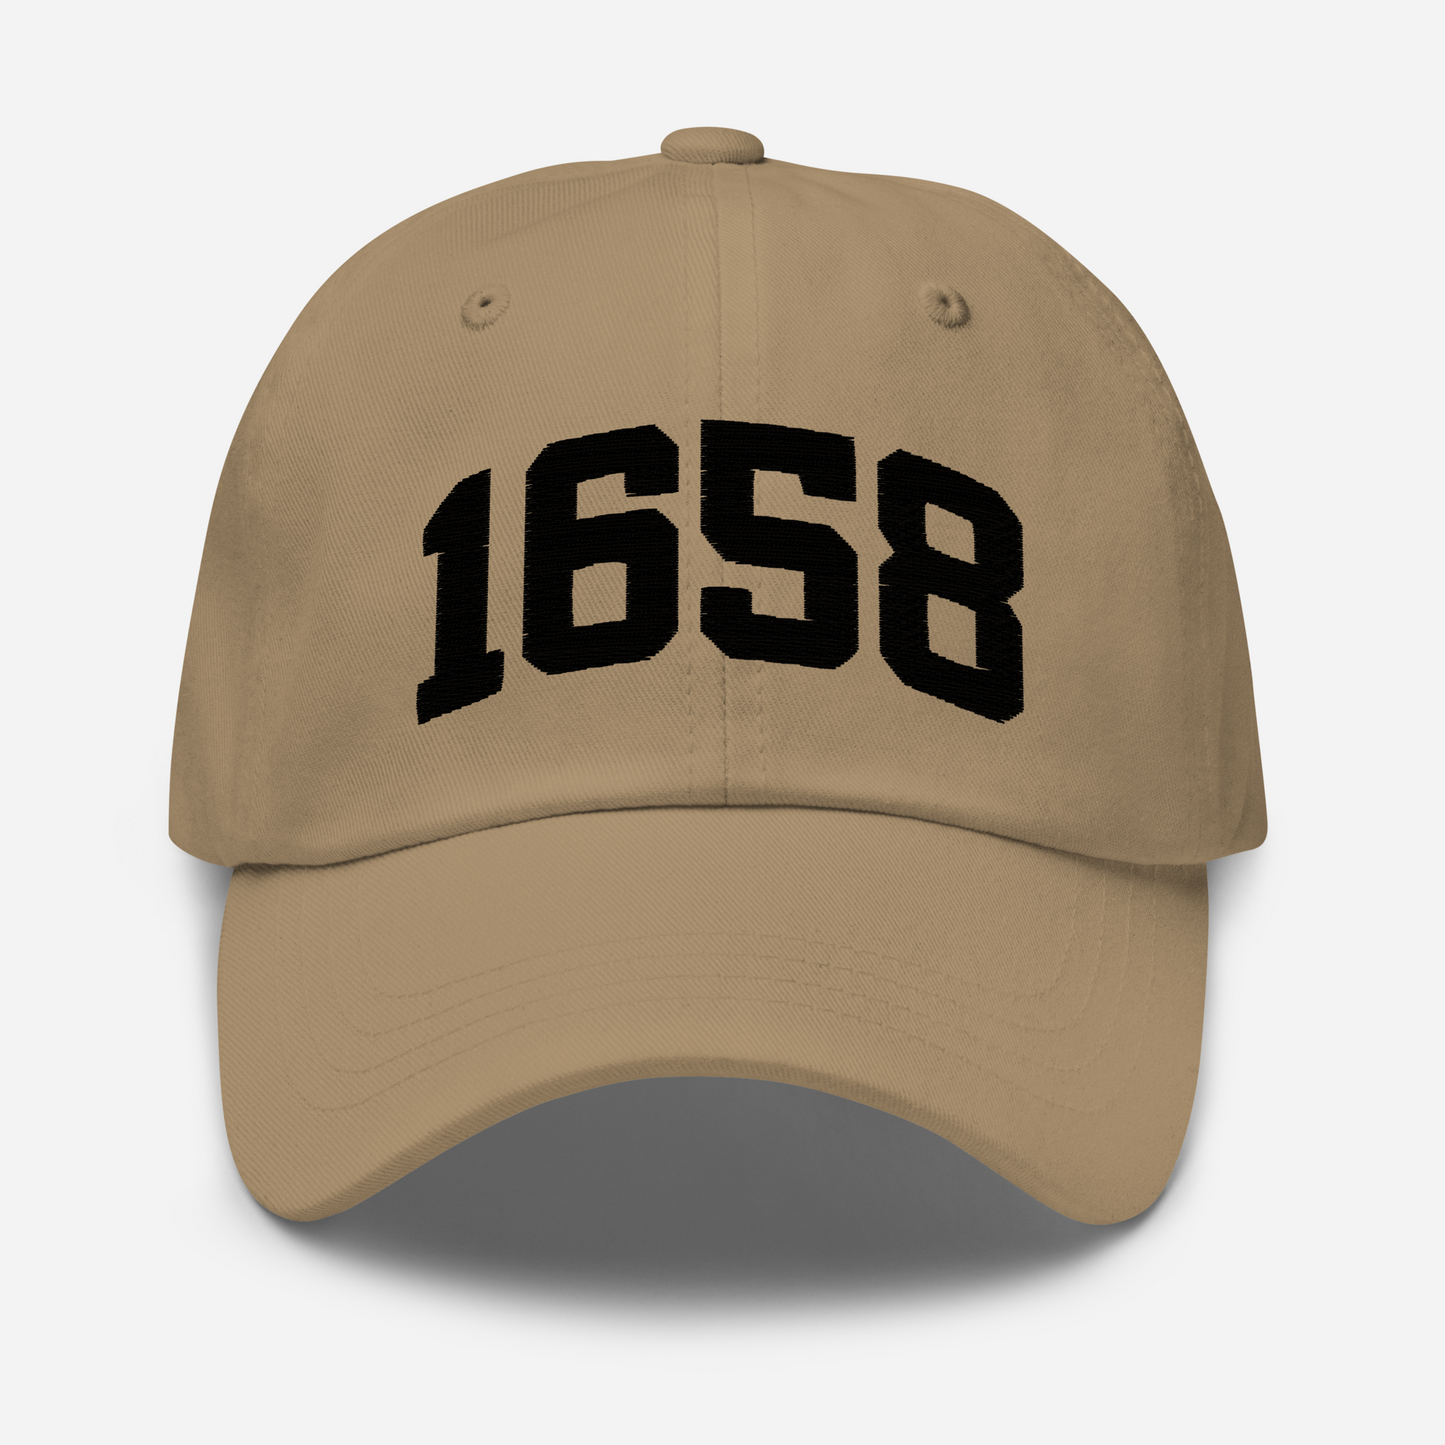 1658 Baseball Hat